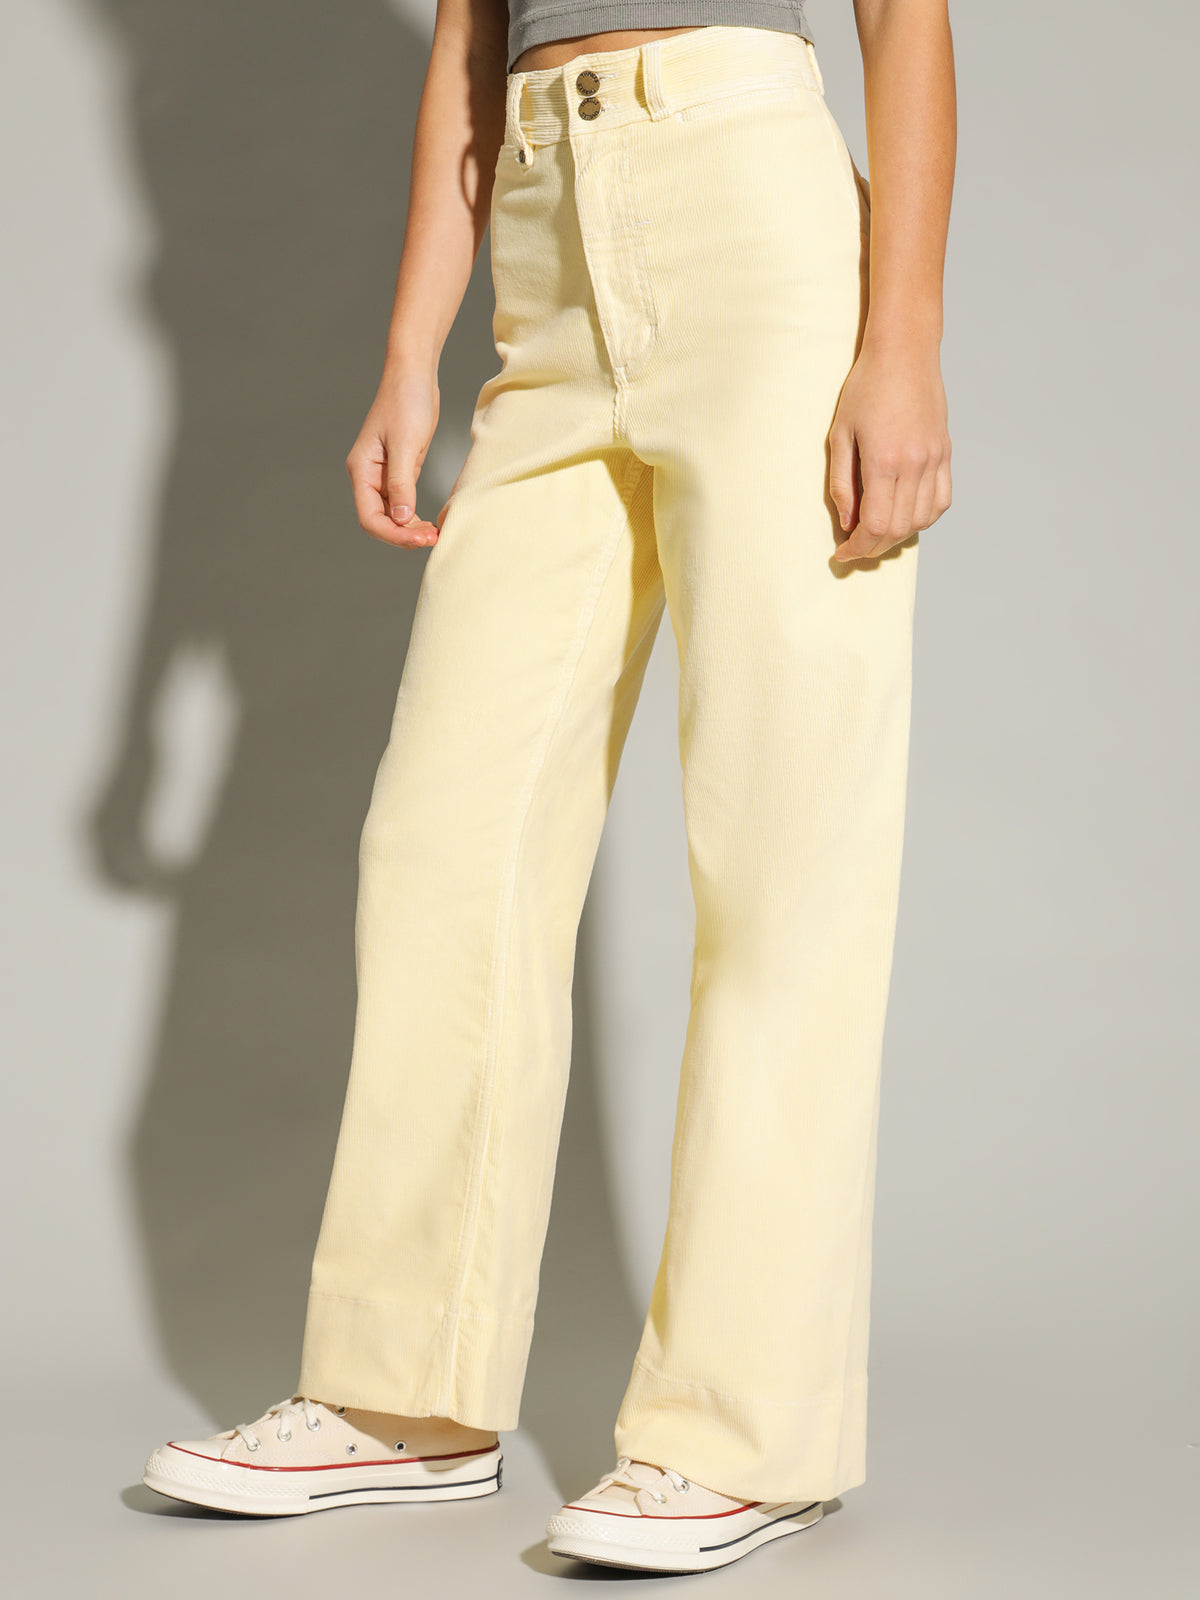 Belle Full Length Cord Pants in Sunlight Yellow